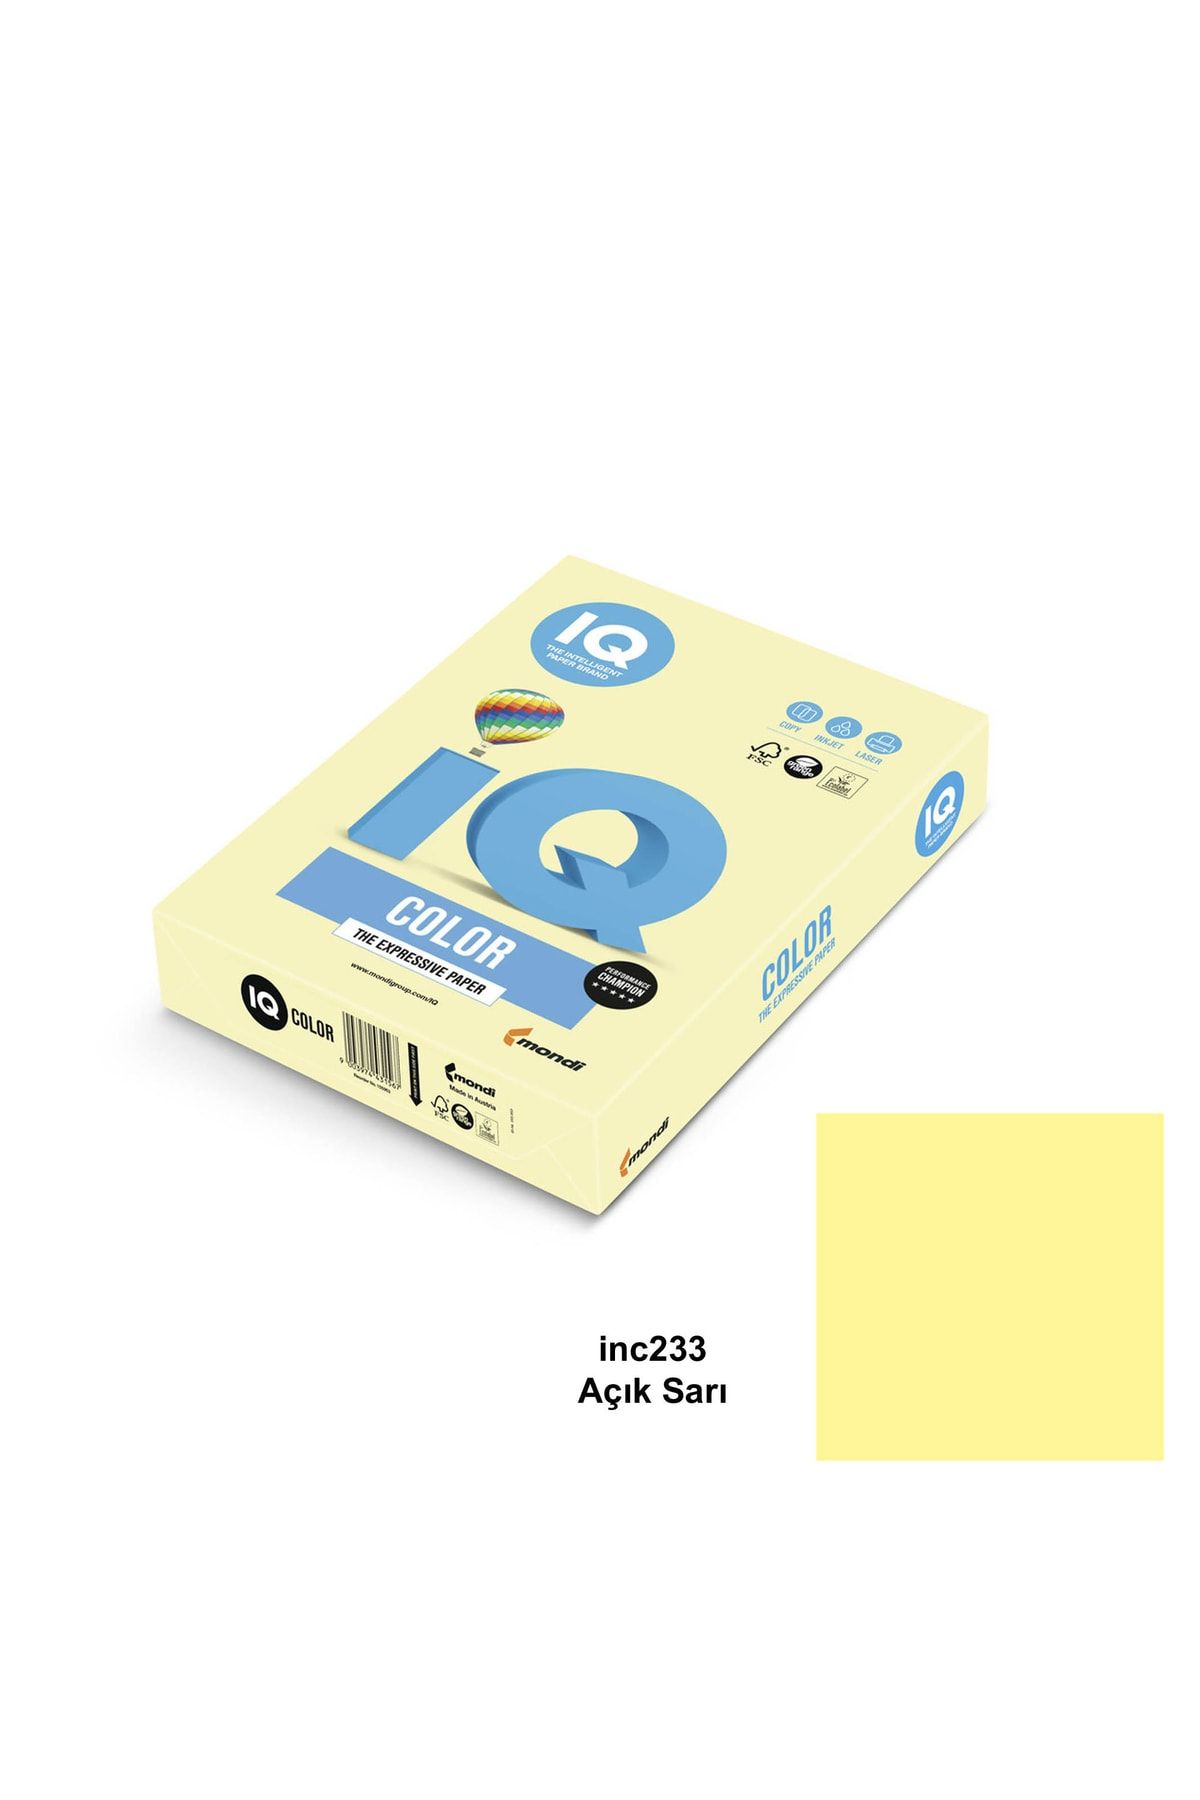 Mondi Iq Color A4 Renkli Fotokopi Kağıdı 80 gr Açık Sarı 500 Ad.